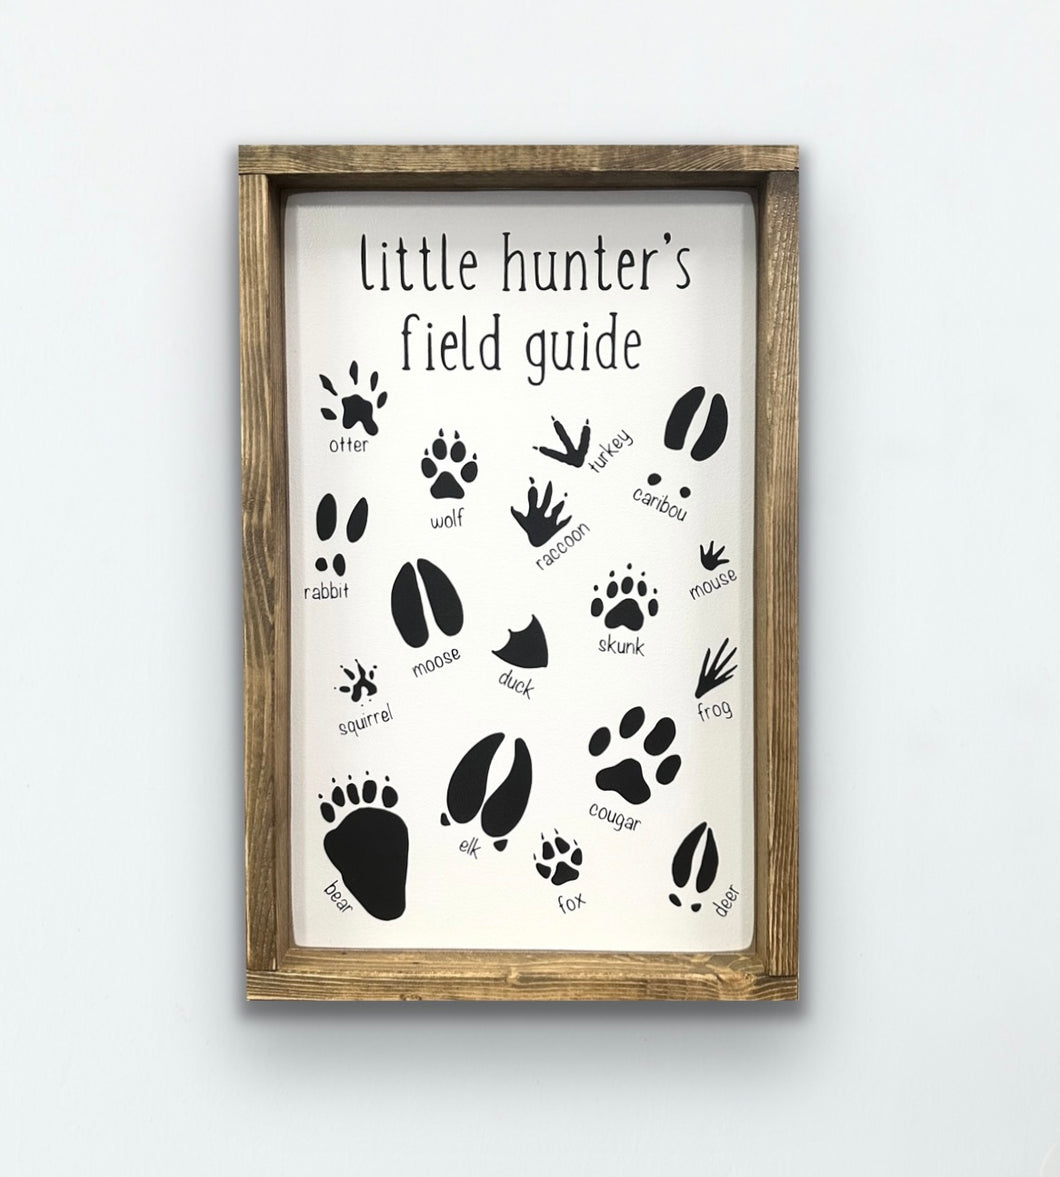 Little Hunter's Guide - Wood Sign